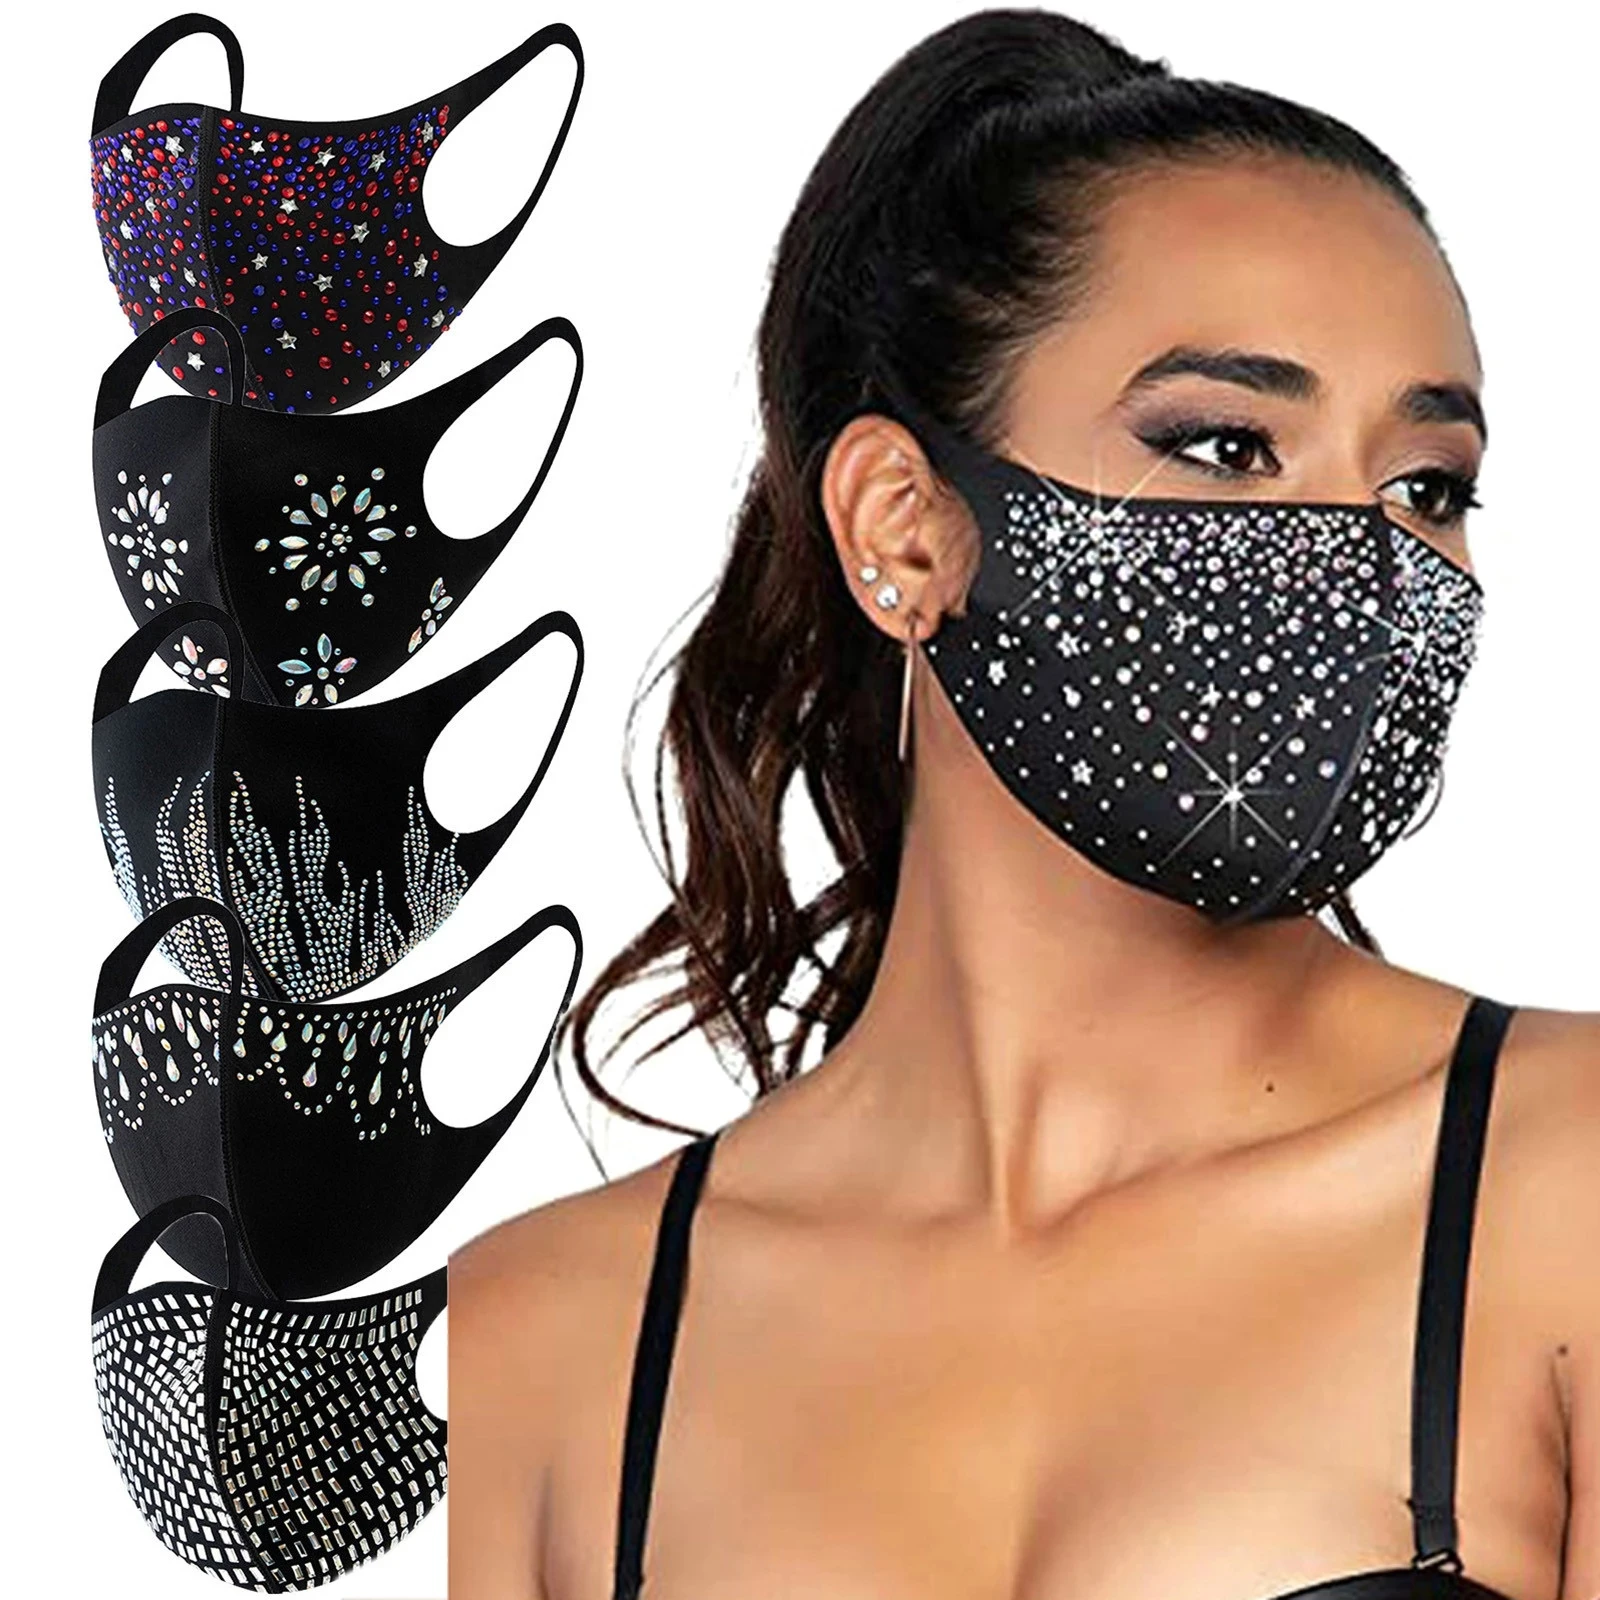 Women’s Fashion Reusable Mask Covid Essentials Face Masks & Coverings cb5feb1b7314637725a2e7: 1|10|11|12|13|14|15|16|17|18|19|2|3|4|5|6|7|8|9